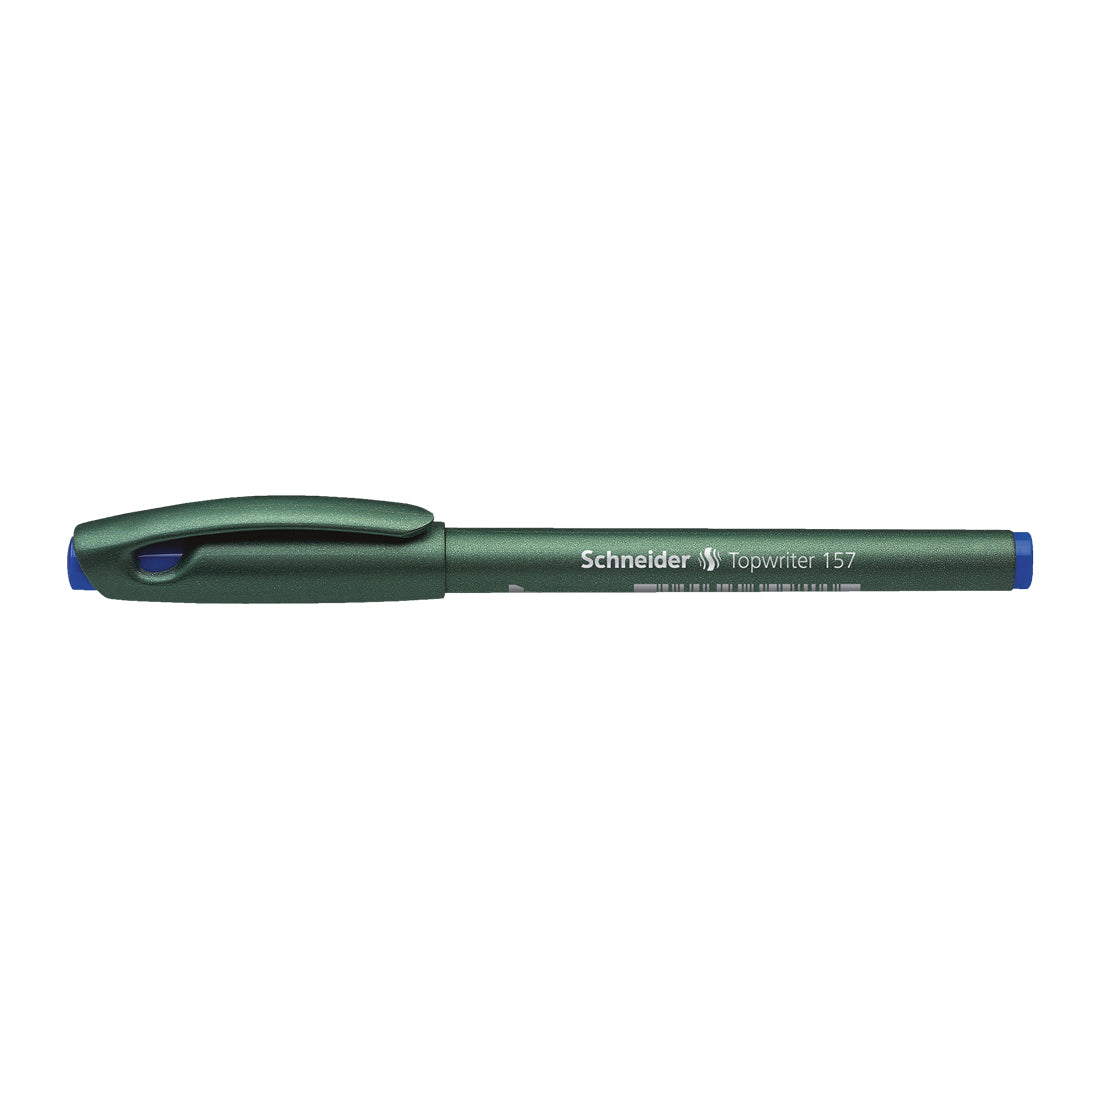 Topwriter 157 Fibre Pens 0.8mm, Box of 10#colour_blue